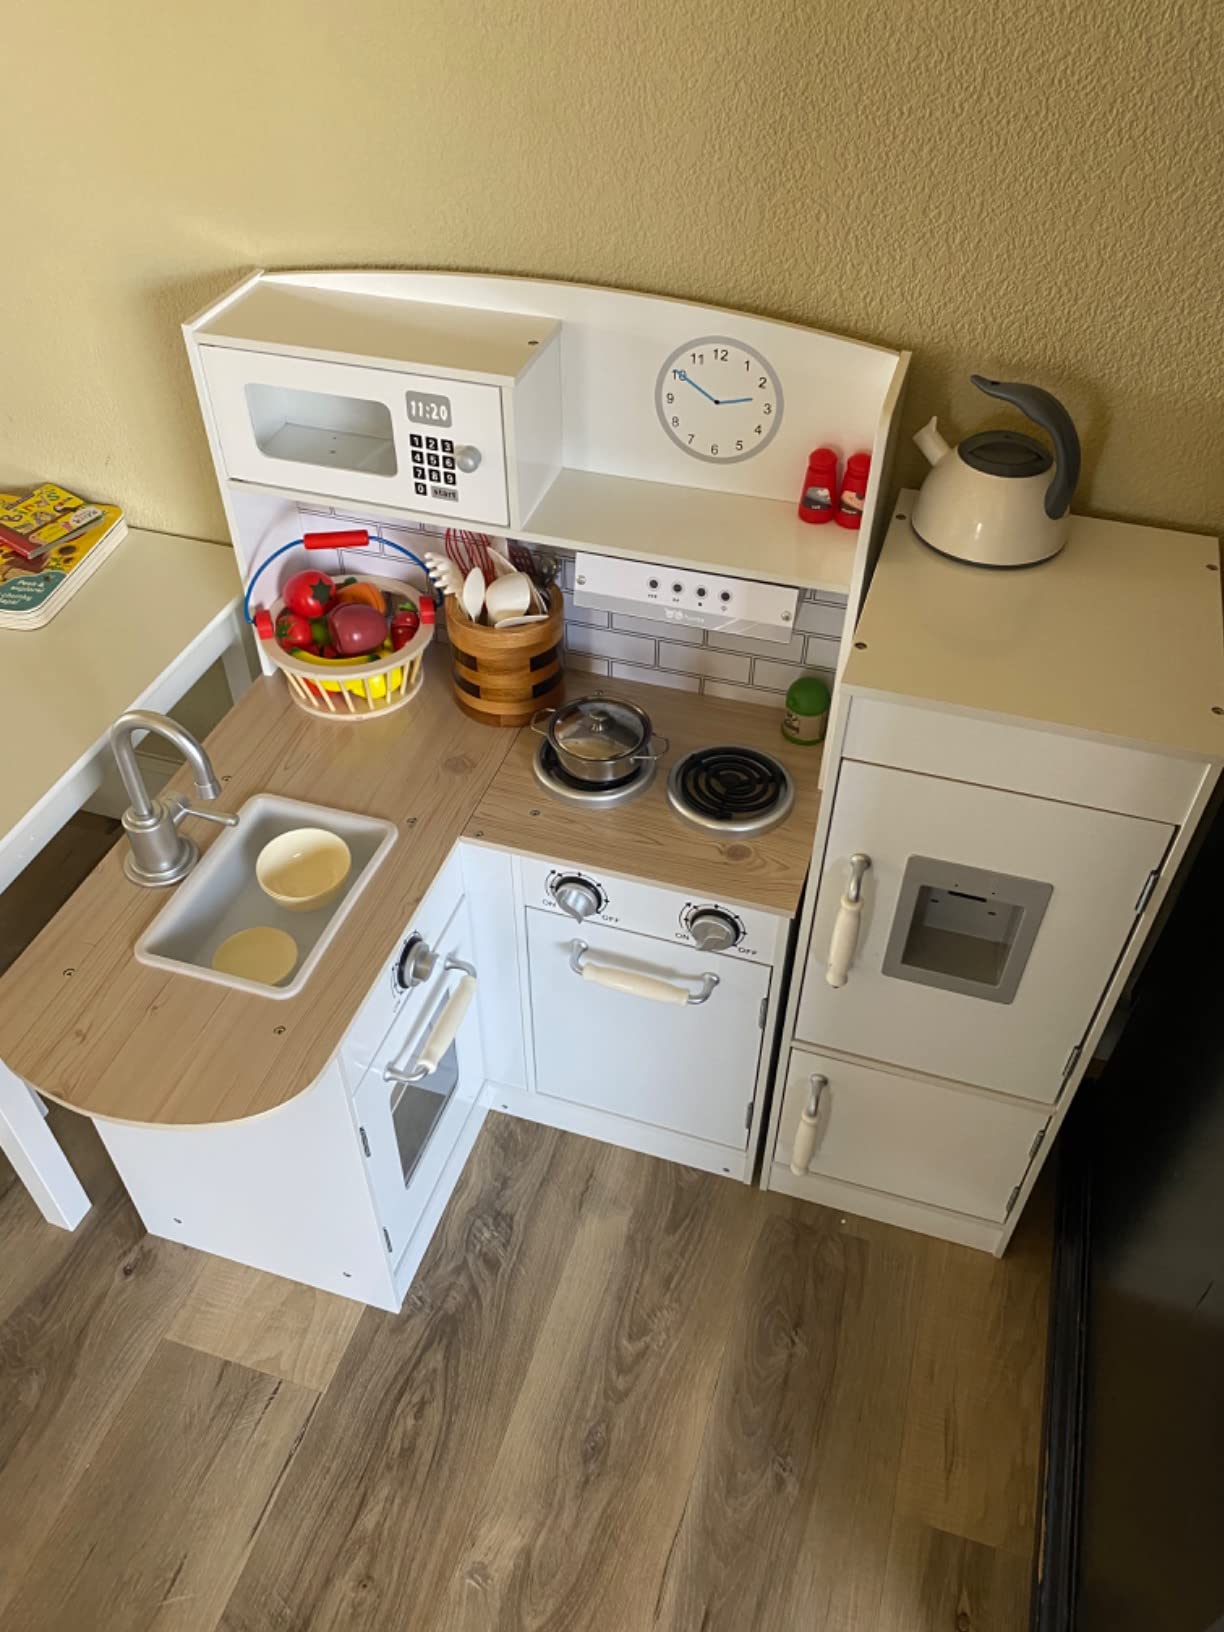 Perfect little kitchen!